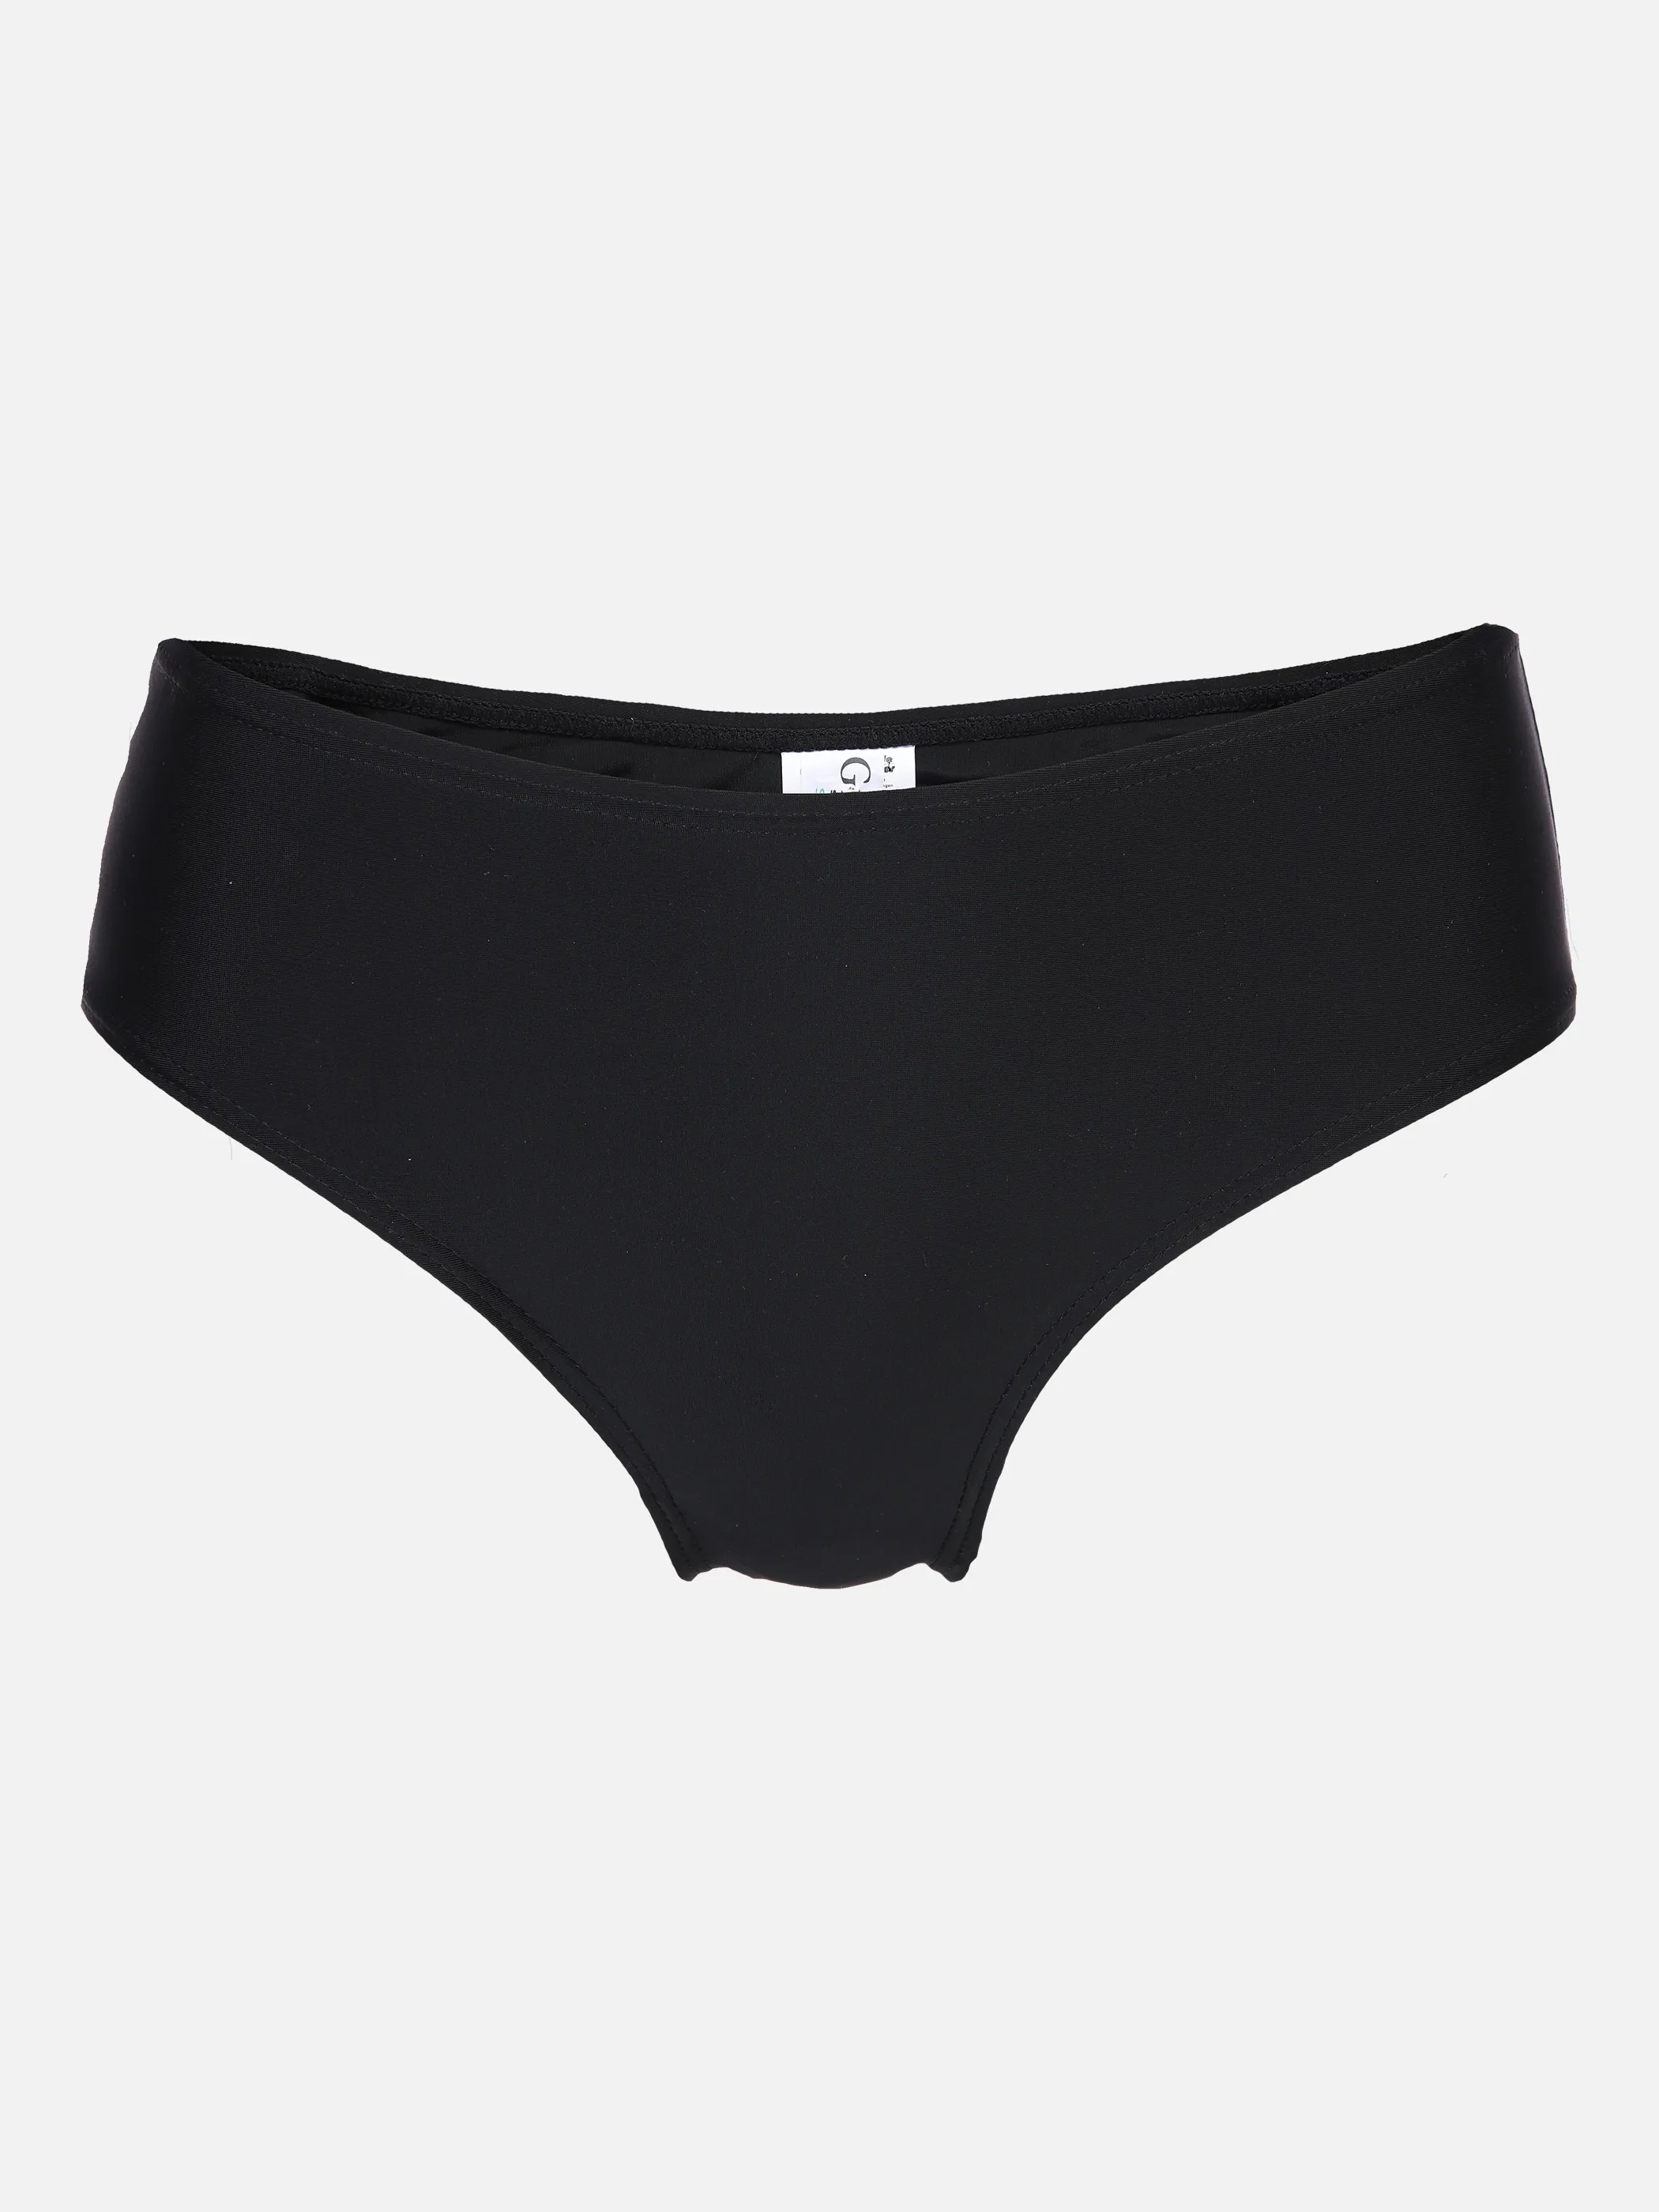 Grinario Sports Da-Bikini Hose Schwarz 877038 BLACK 1